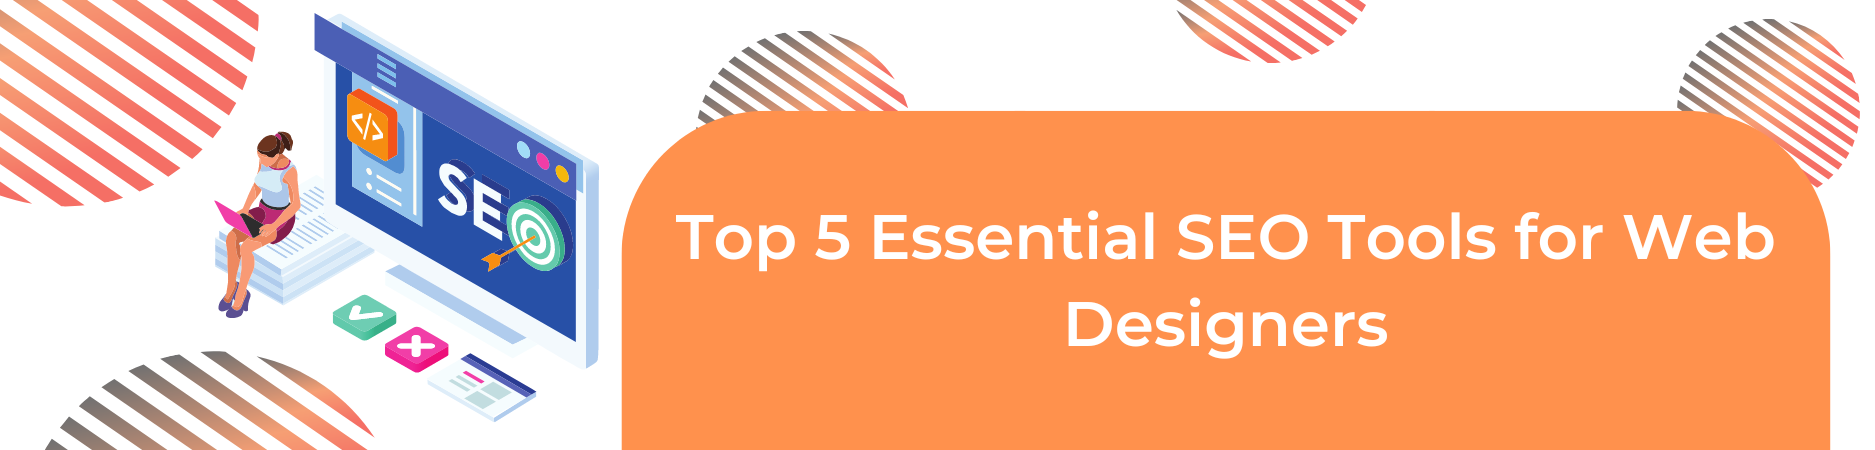 Top 5 Essential SEO Tools for Web Designers